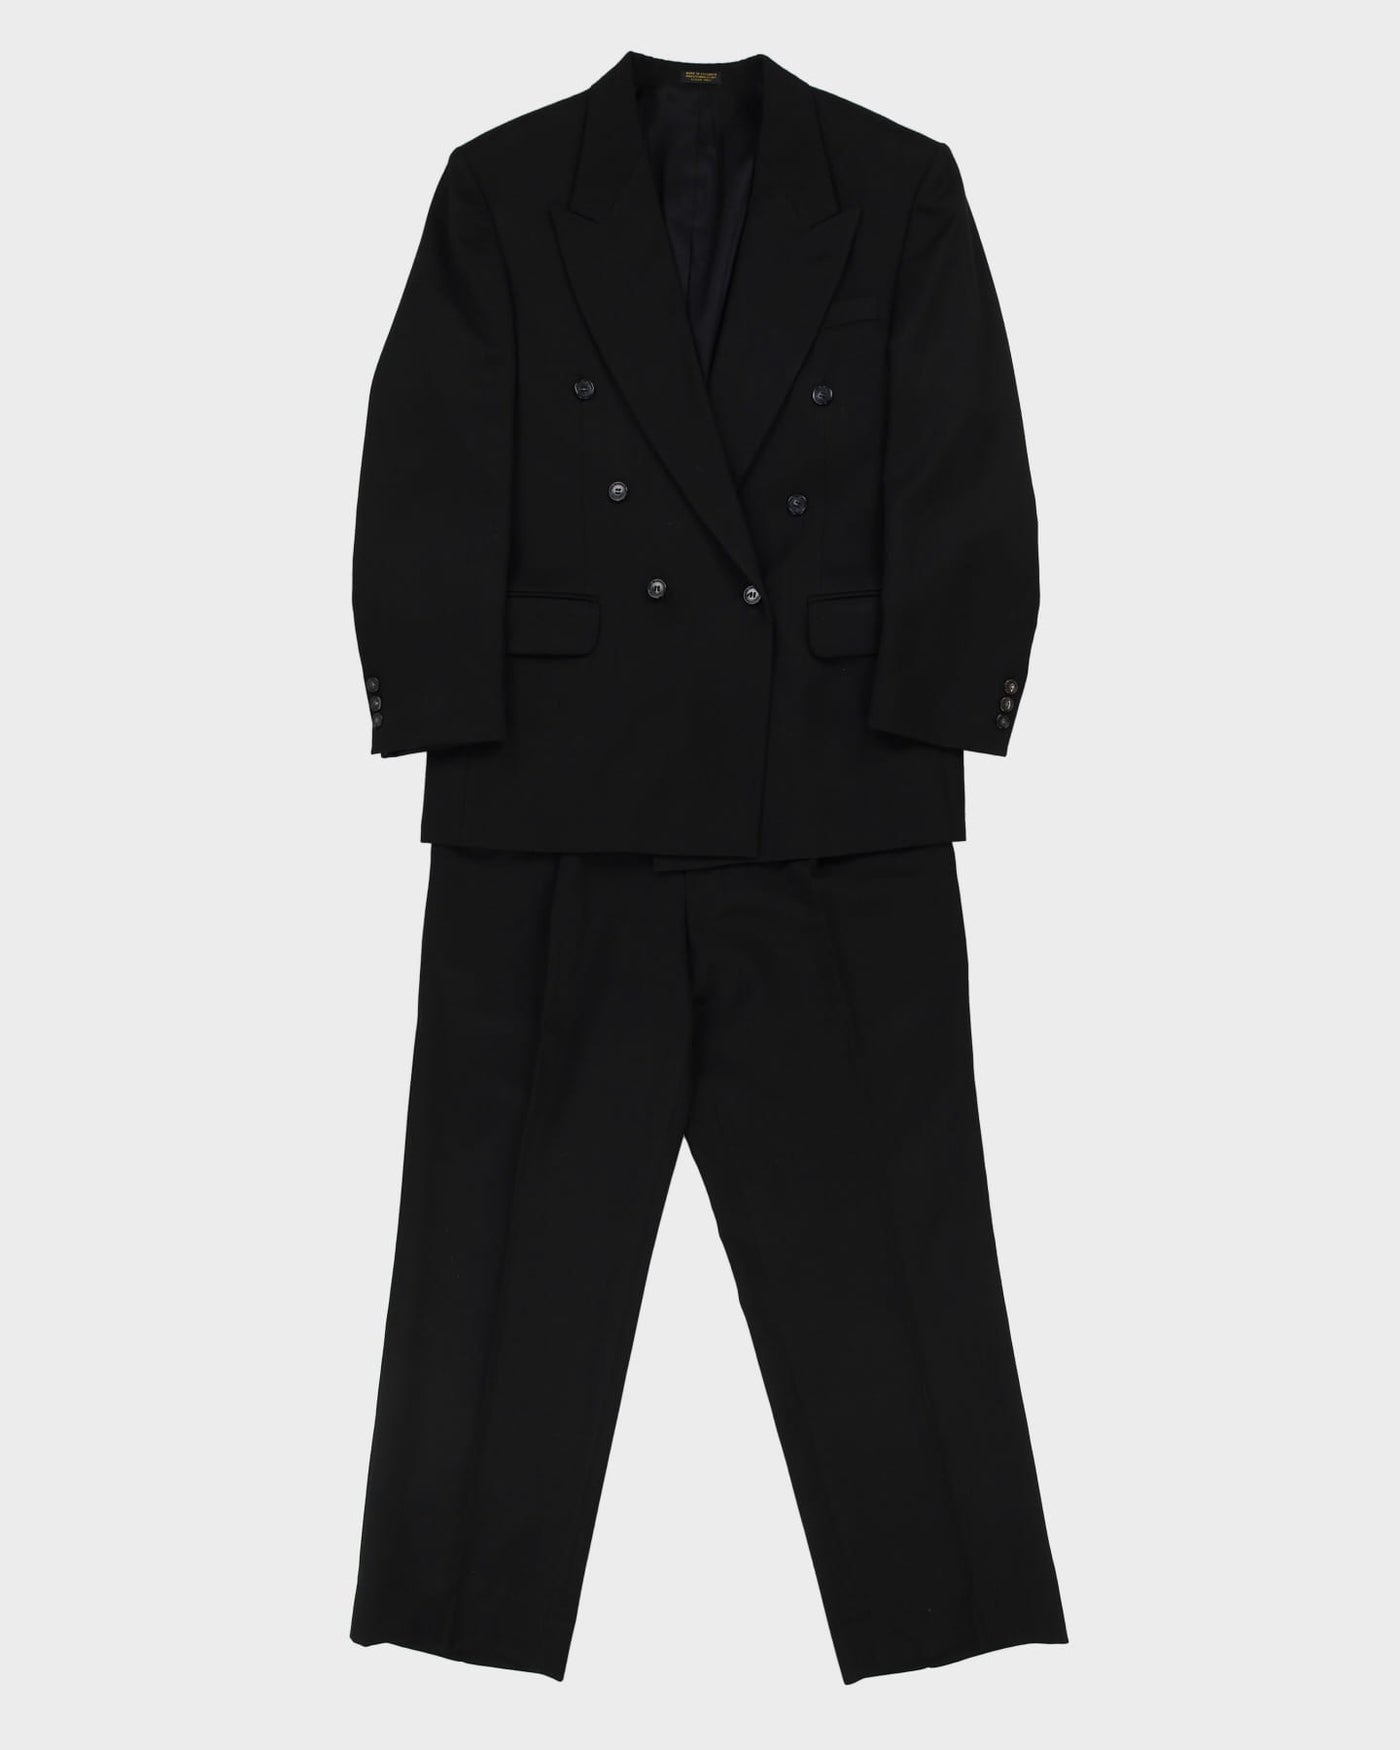 Oscar De La Renta Black 2 Piece Suit - CH42 W32